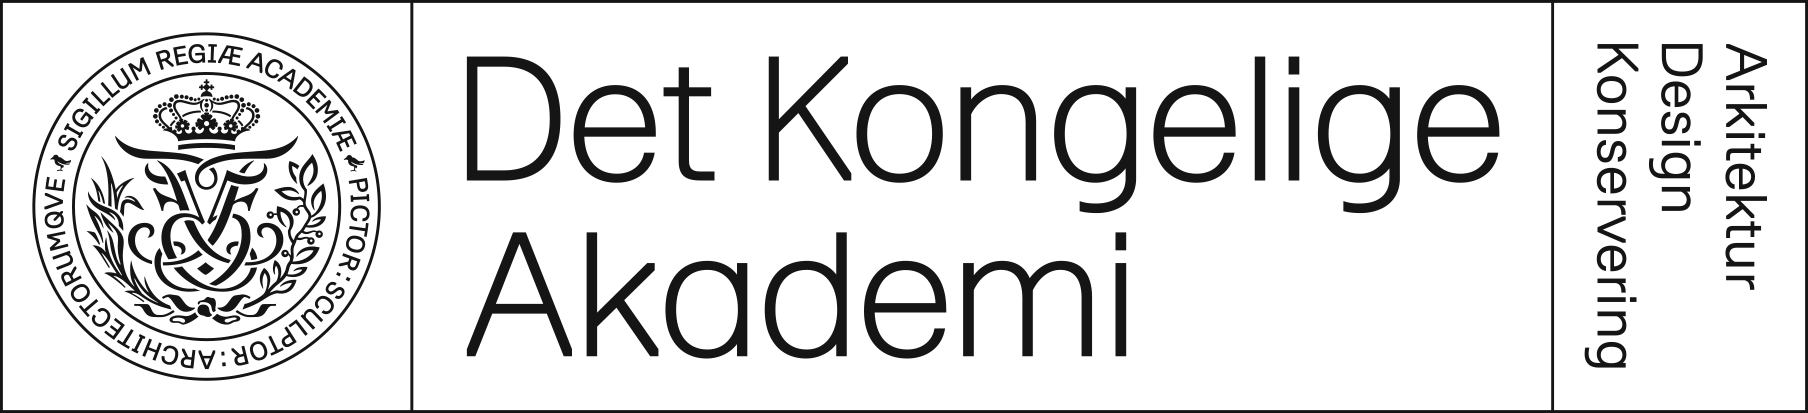 Det Kongelige Akademi